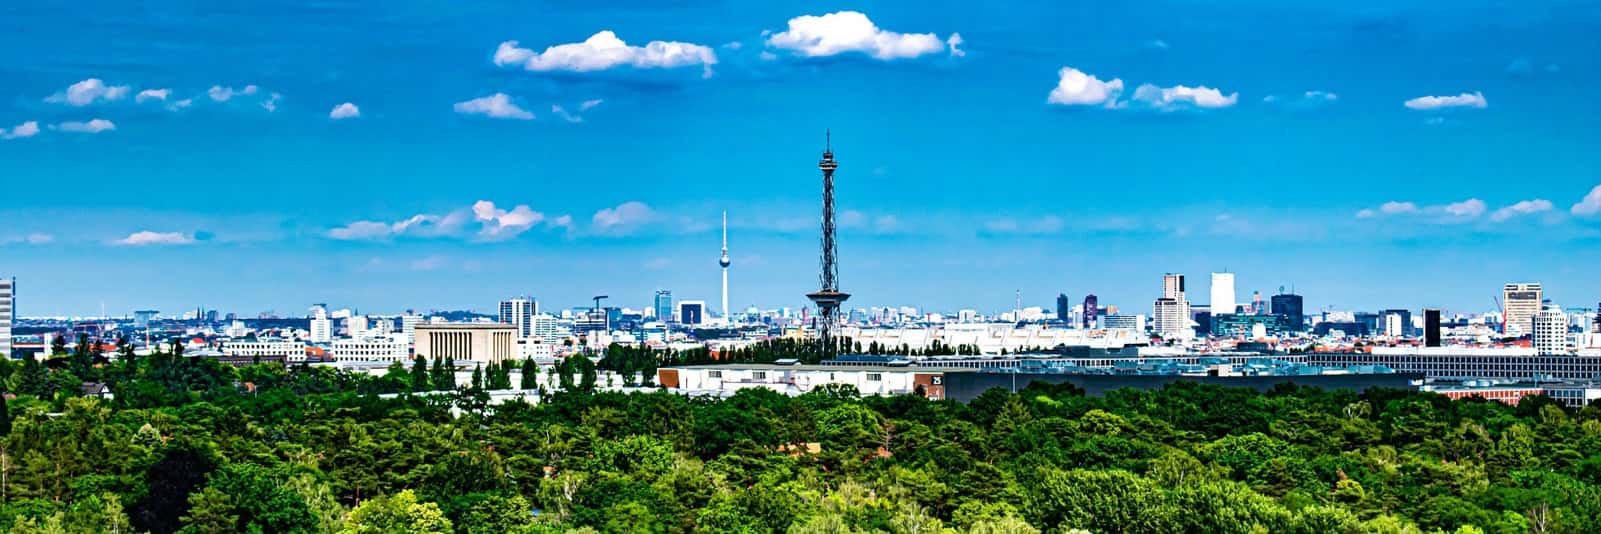 Umzug Berlin Panorama über Berlin